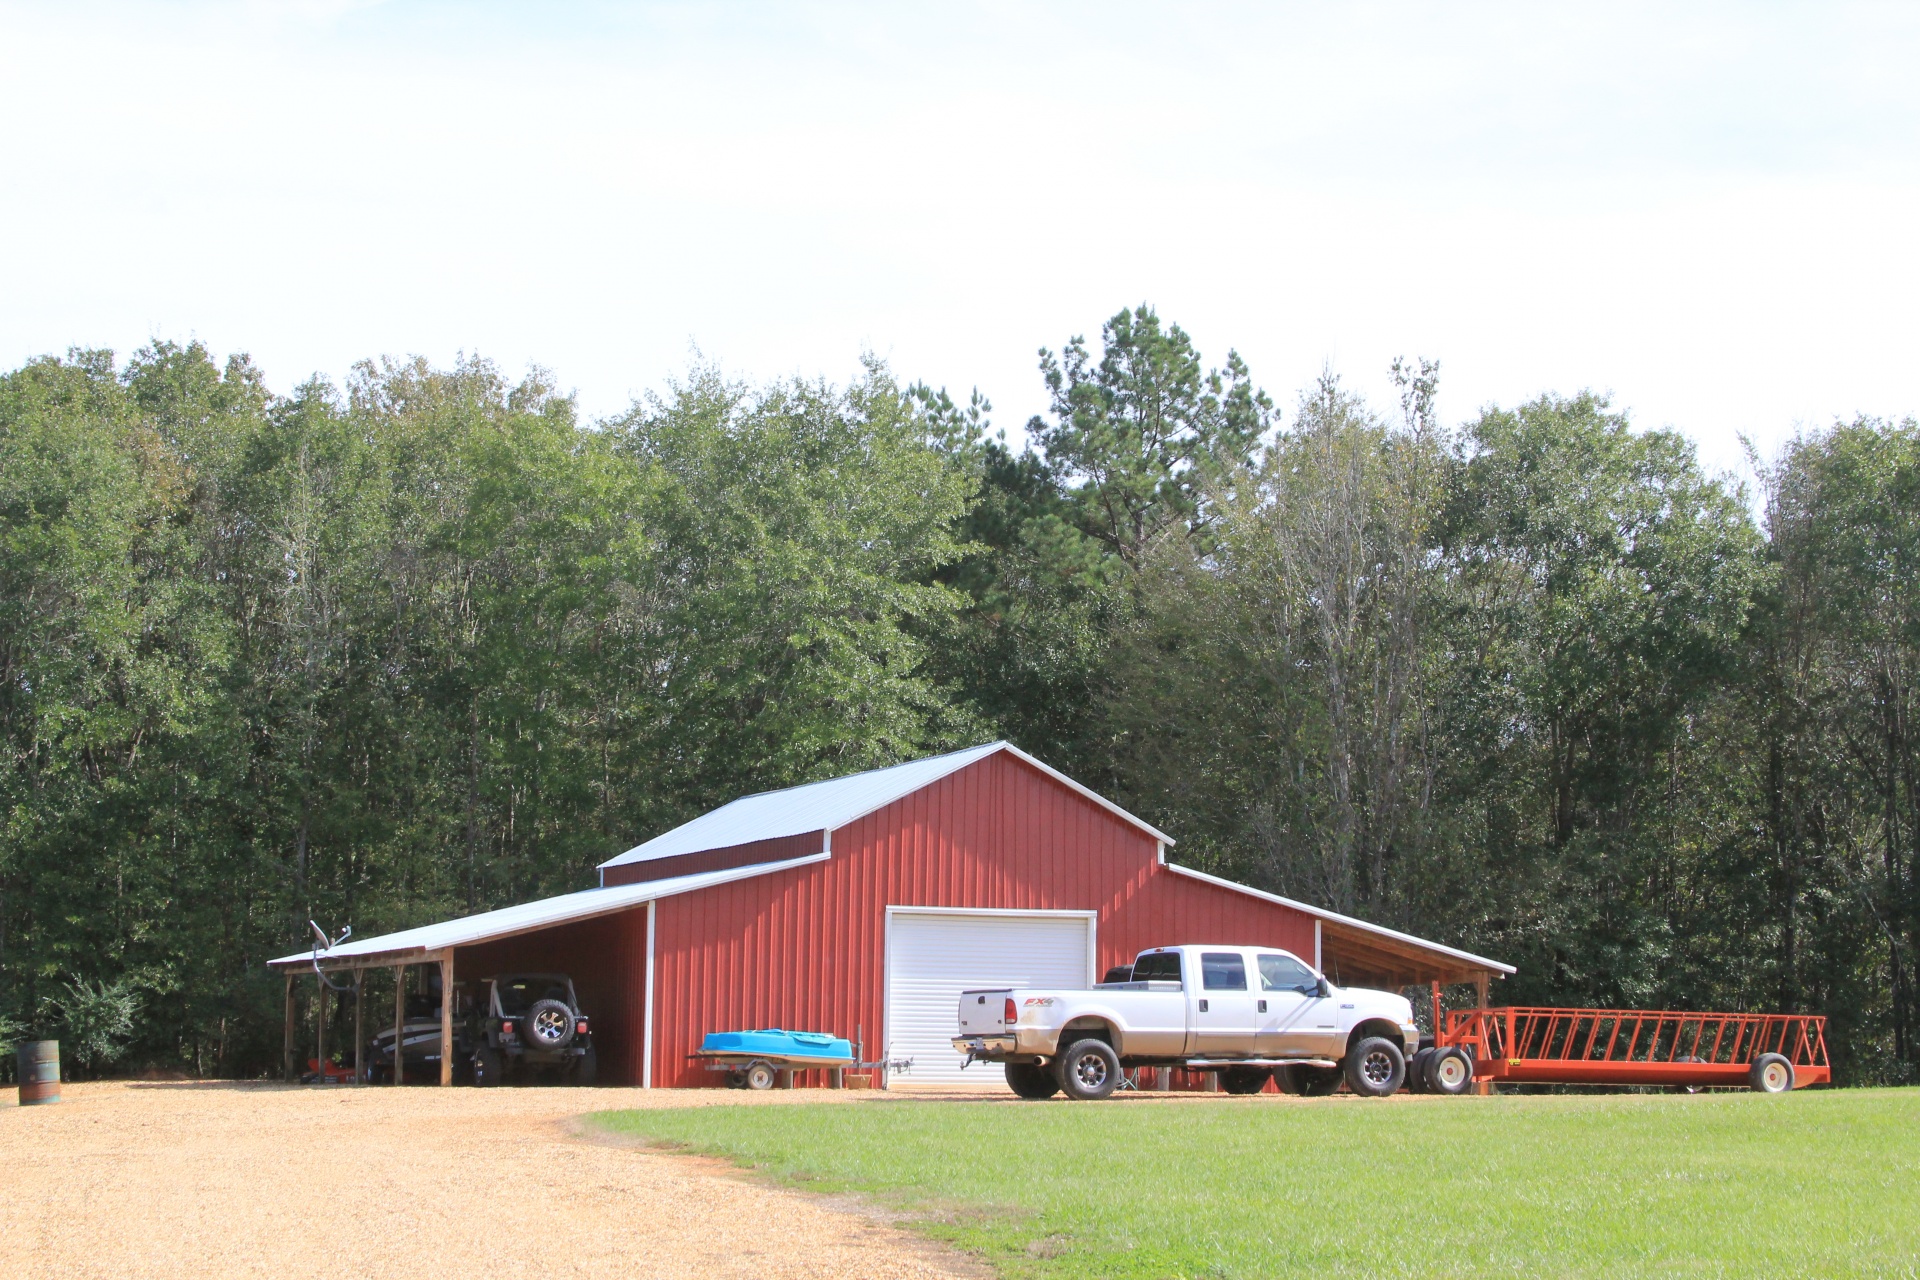 An Alabama Farm